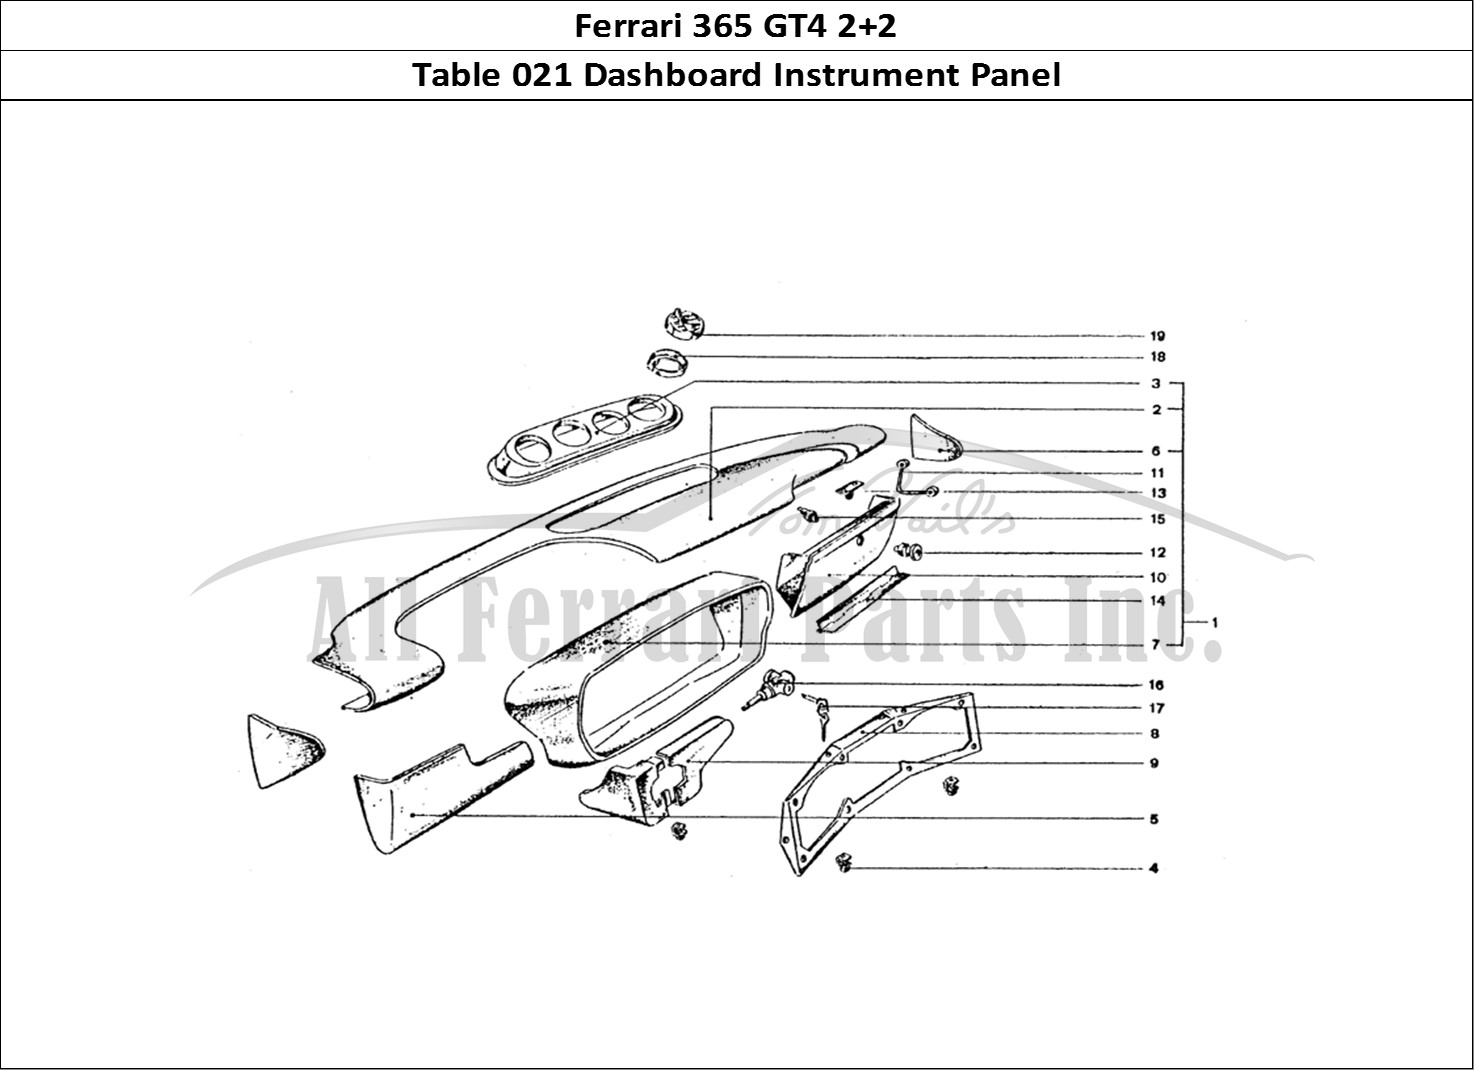 Ferrari Parts Ferrari 365 GT4 2+2 Coachwork Page 021 Dashboard & Ignition Swit